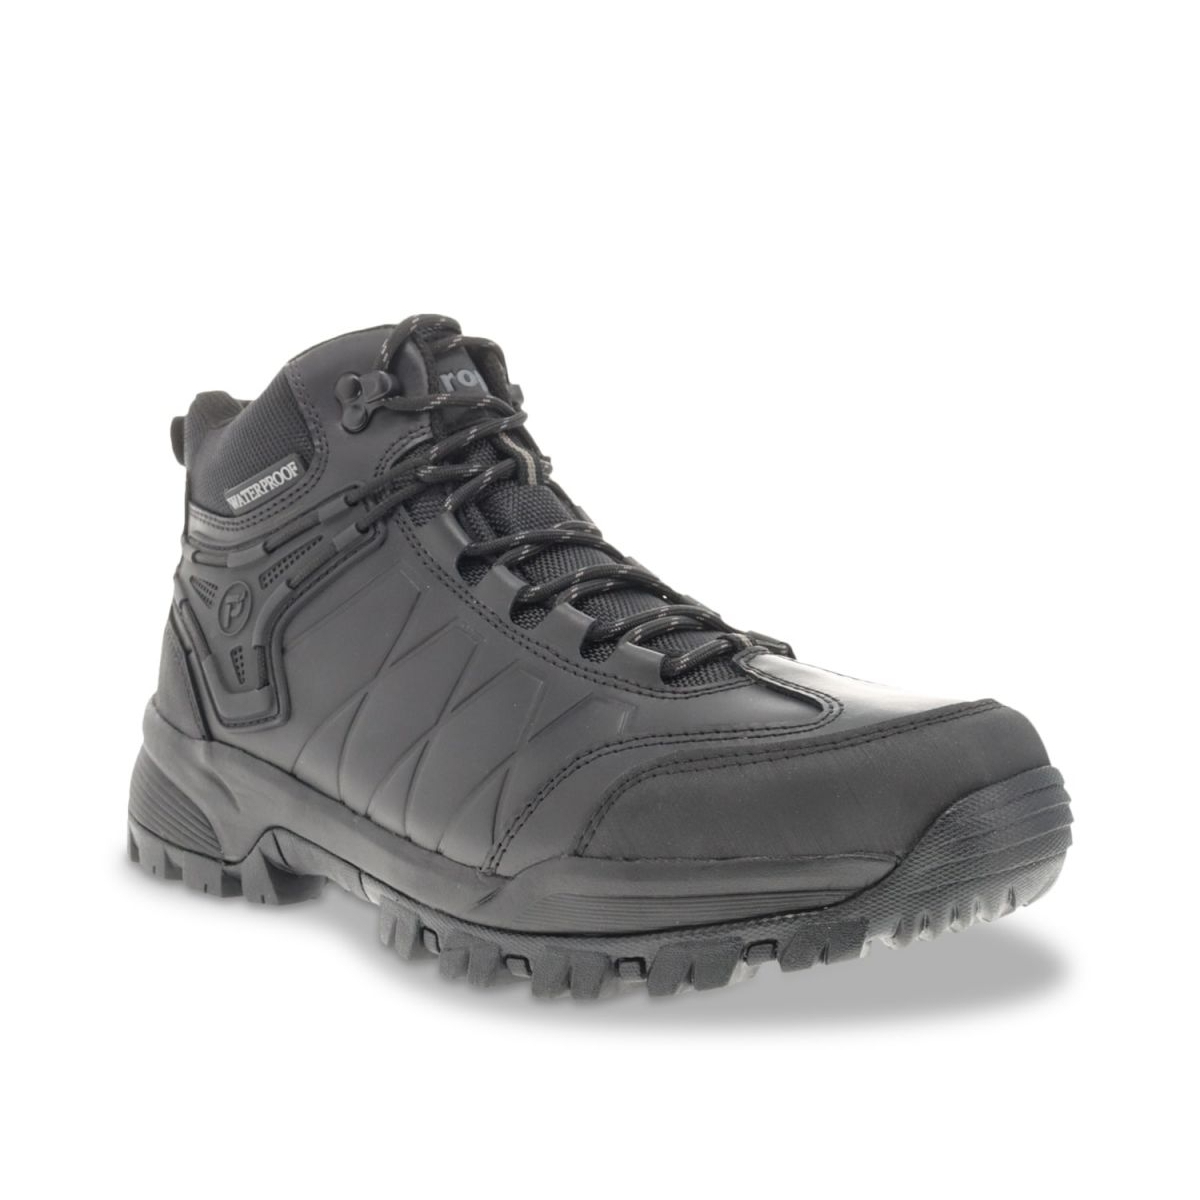 Propet Men's Ridge Walker Force Hiking Boots Black - MBA052LBLK BLACK - BLACK, 15 Wide